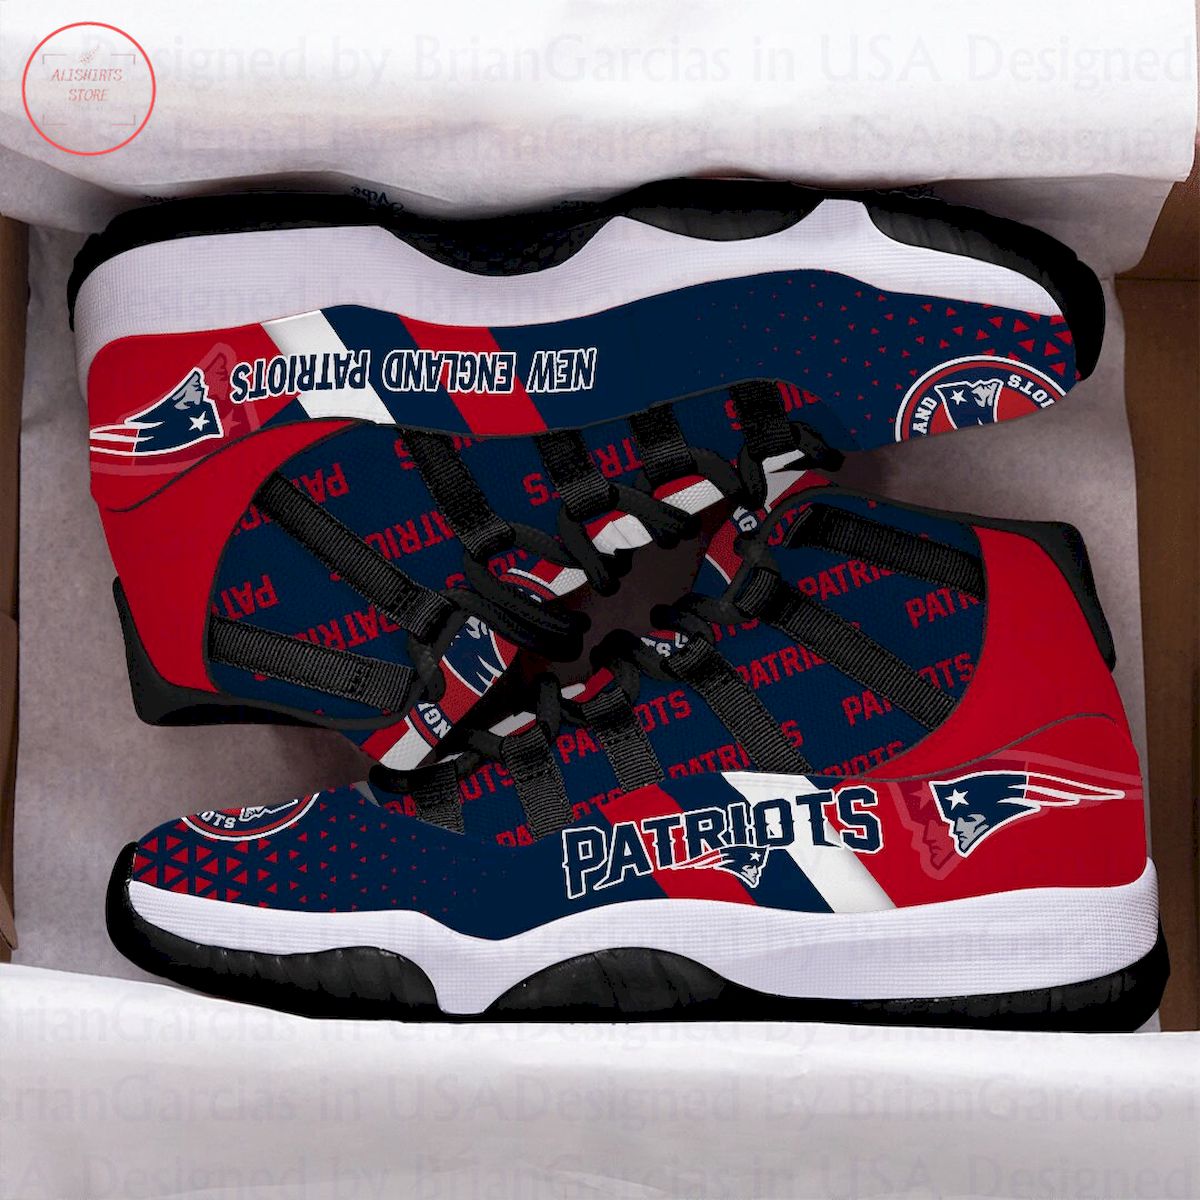 New England Patriots Air Jordan 11 Sneakers